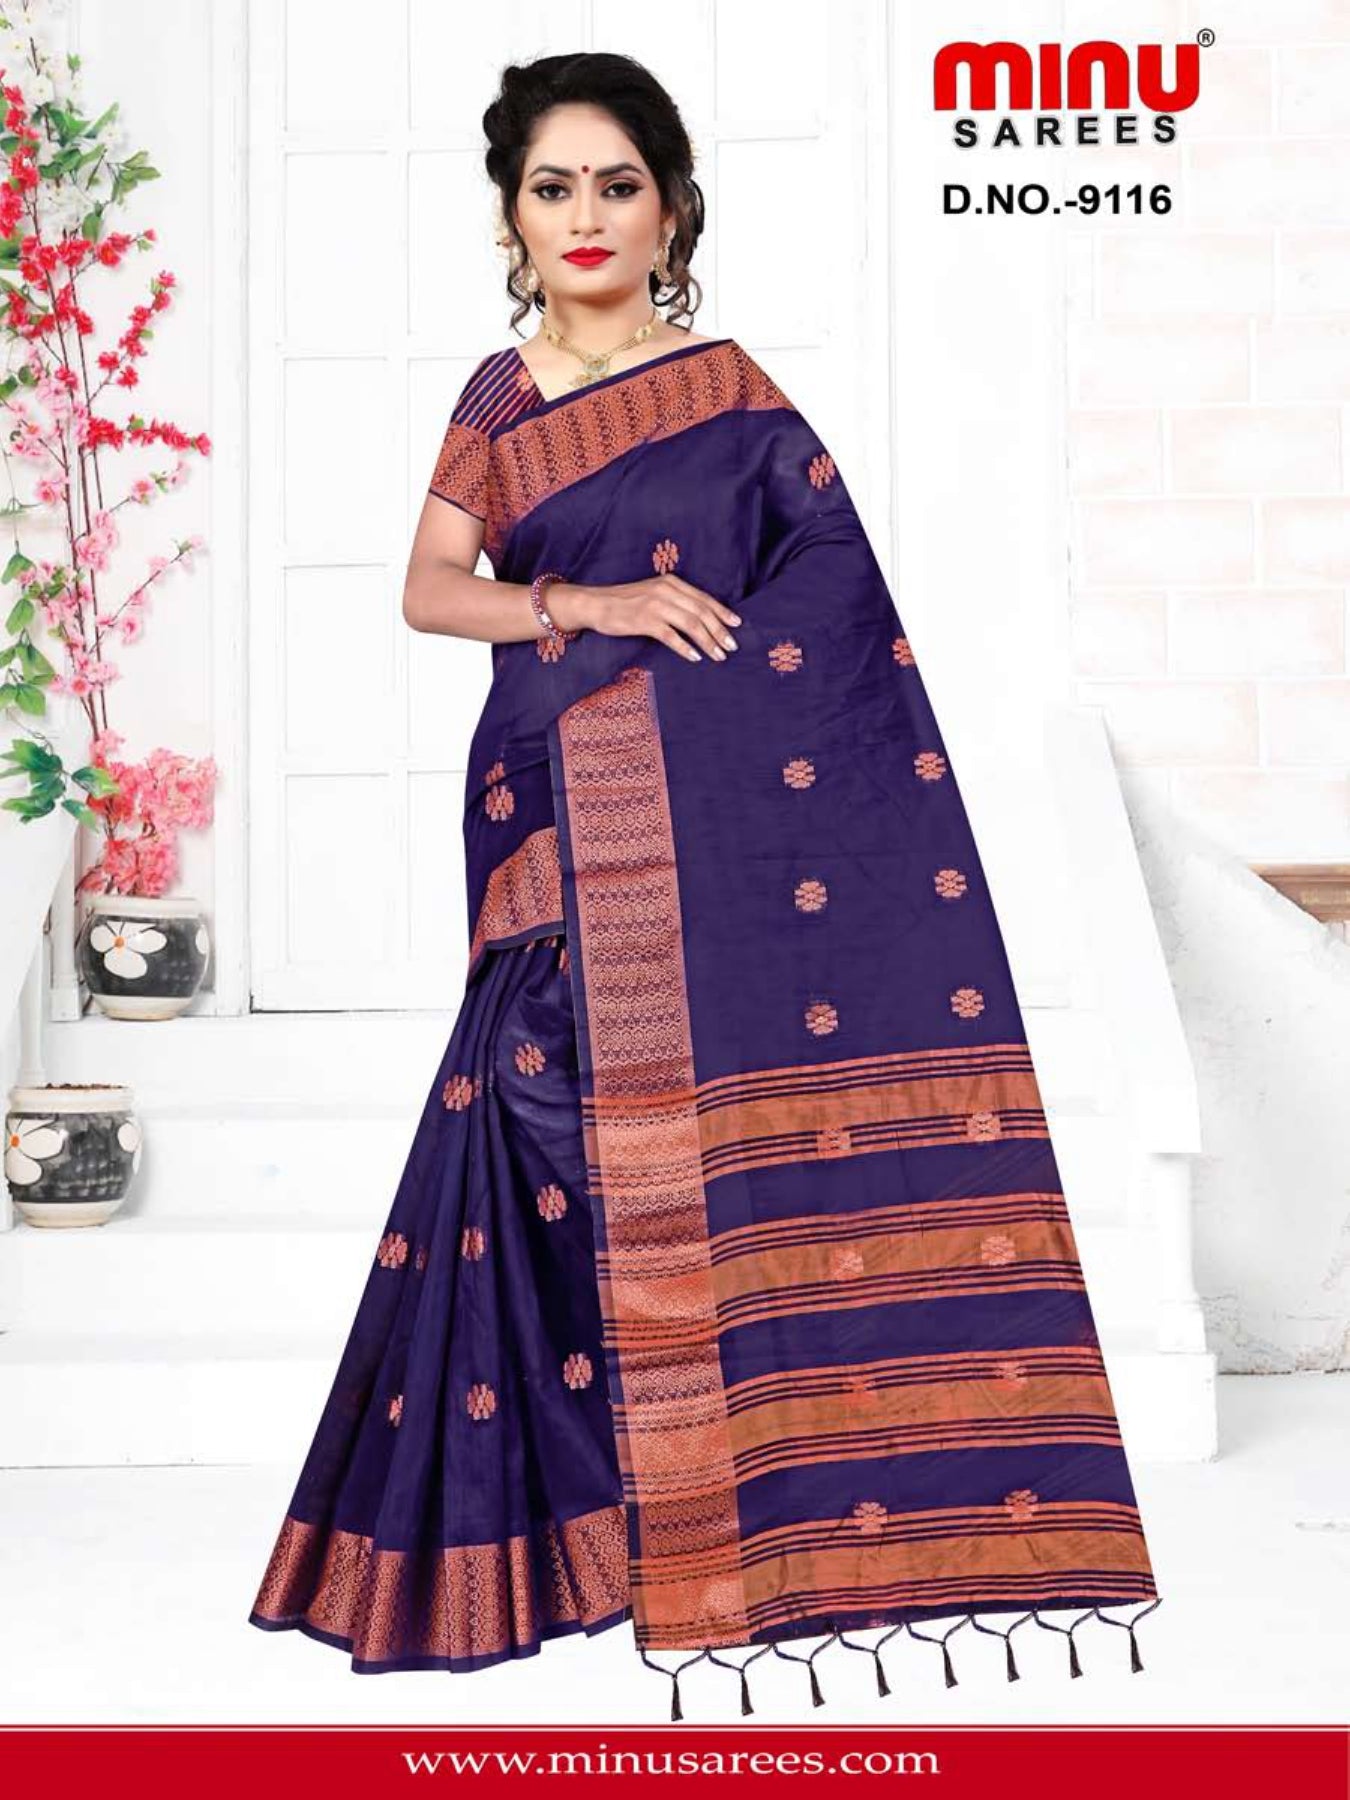 Fancy sarees for wholesale online